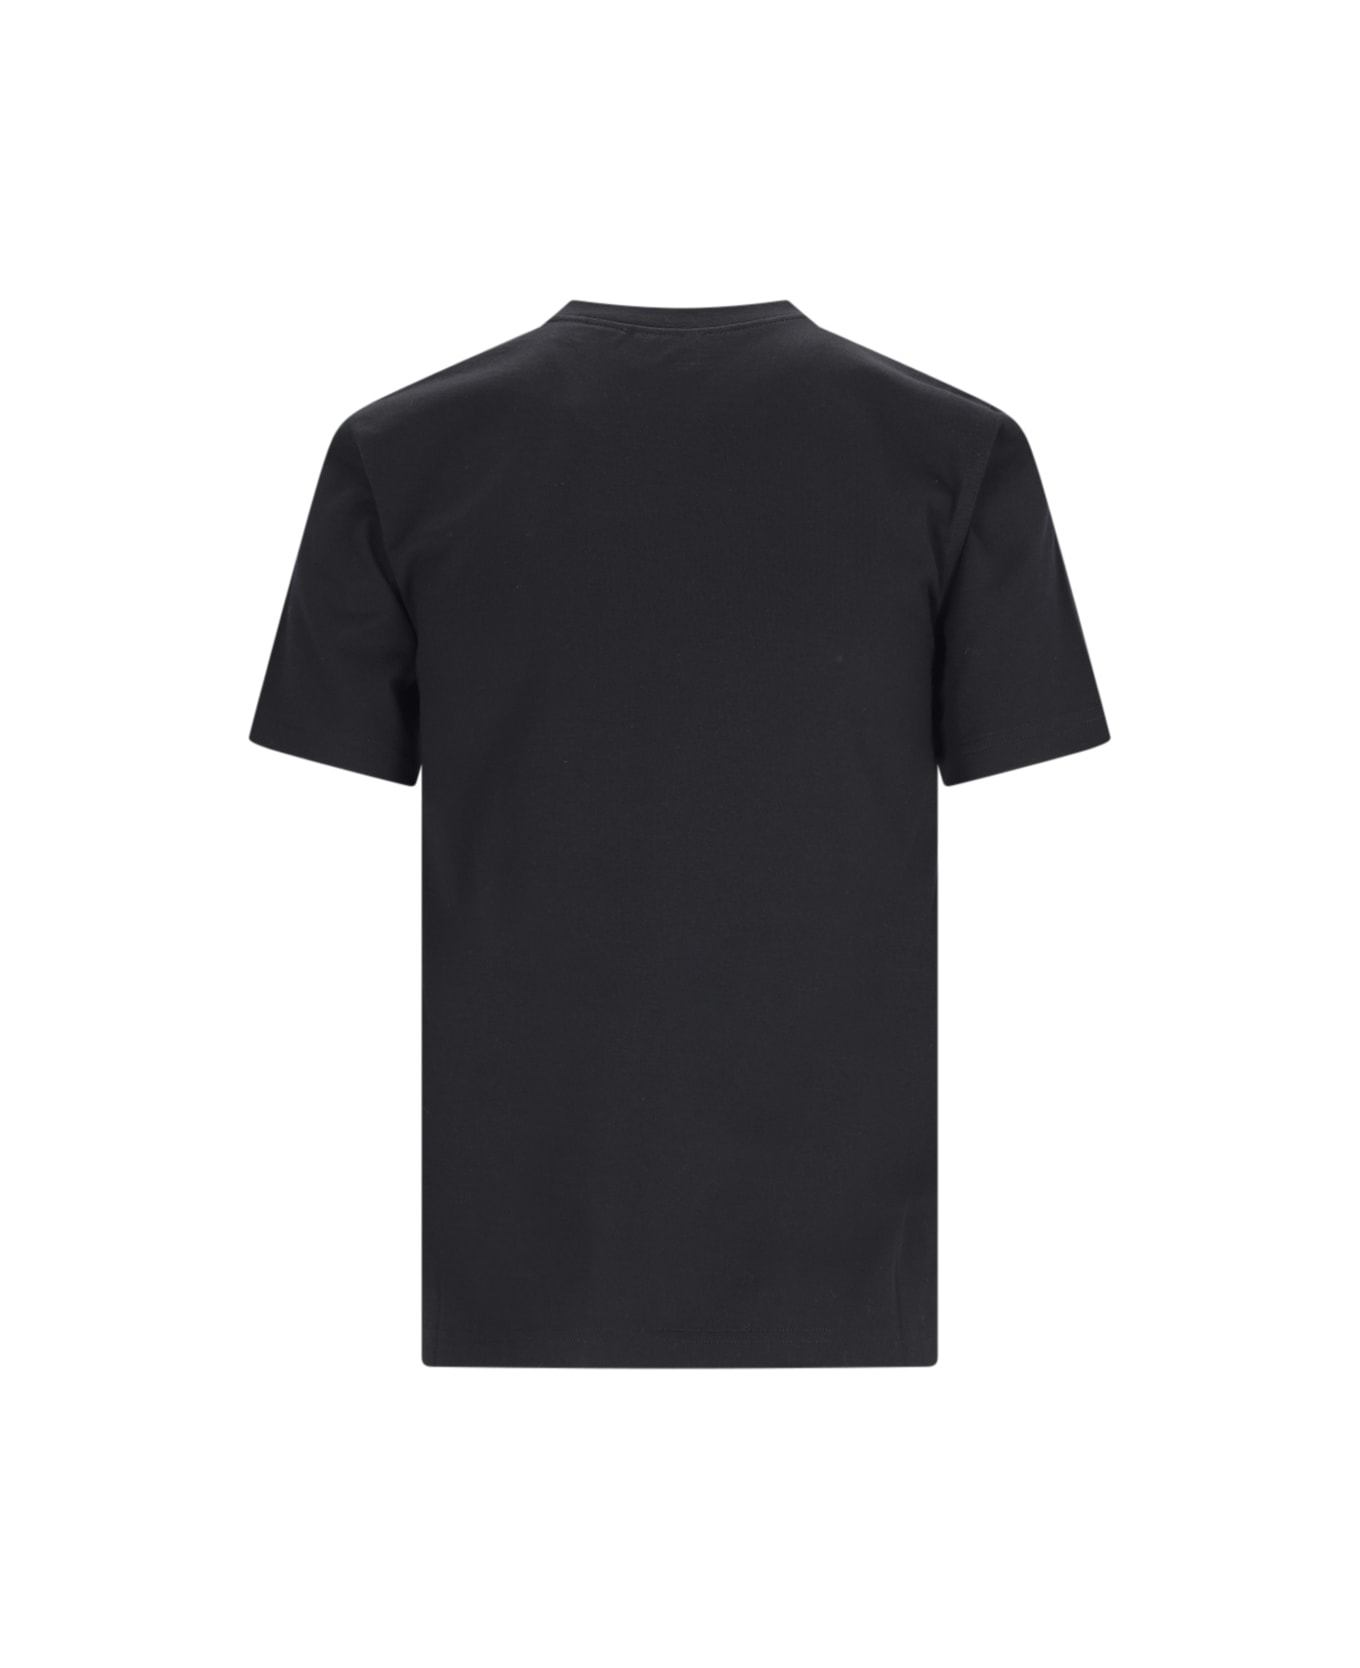 Burberry 'horseferry' T-shirt - Black  